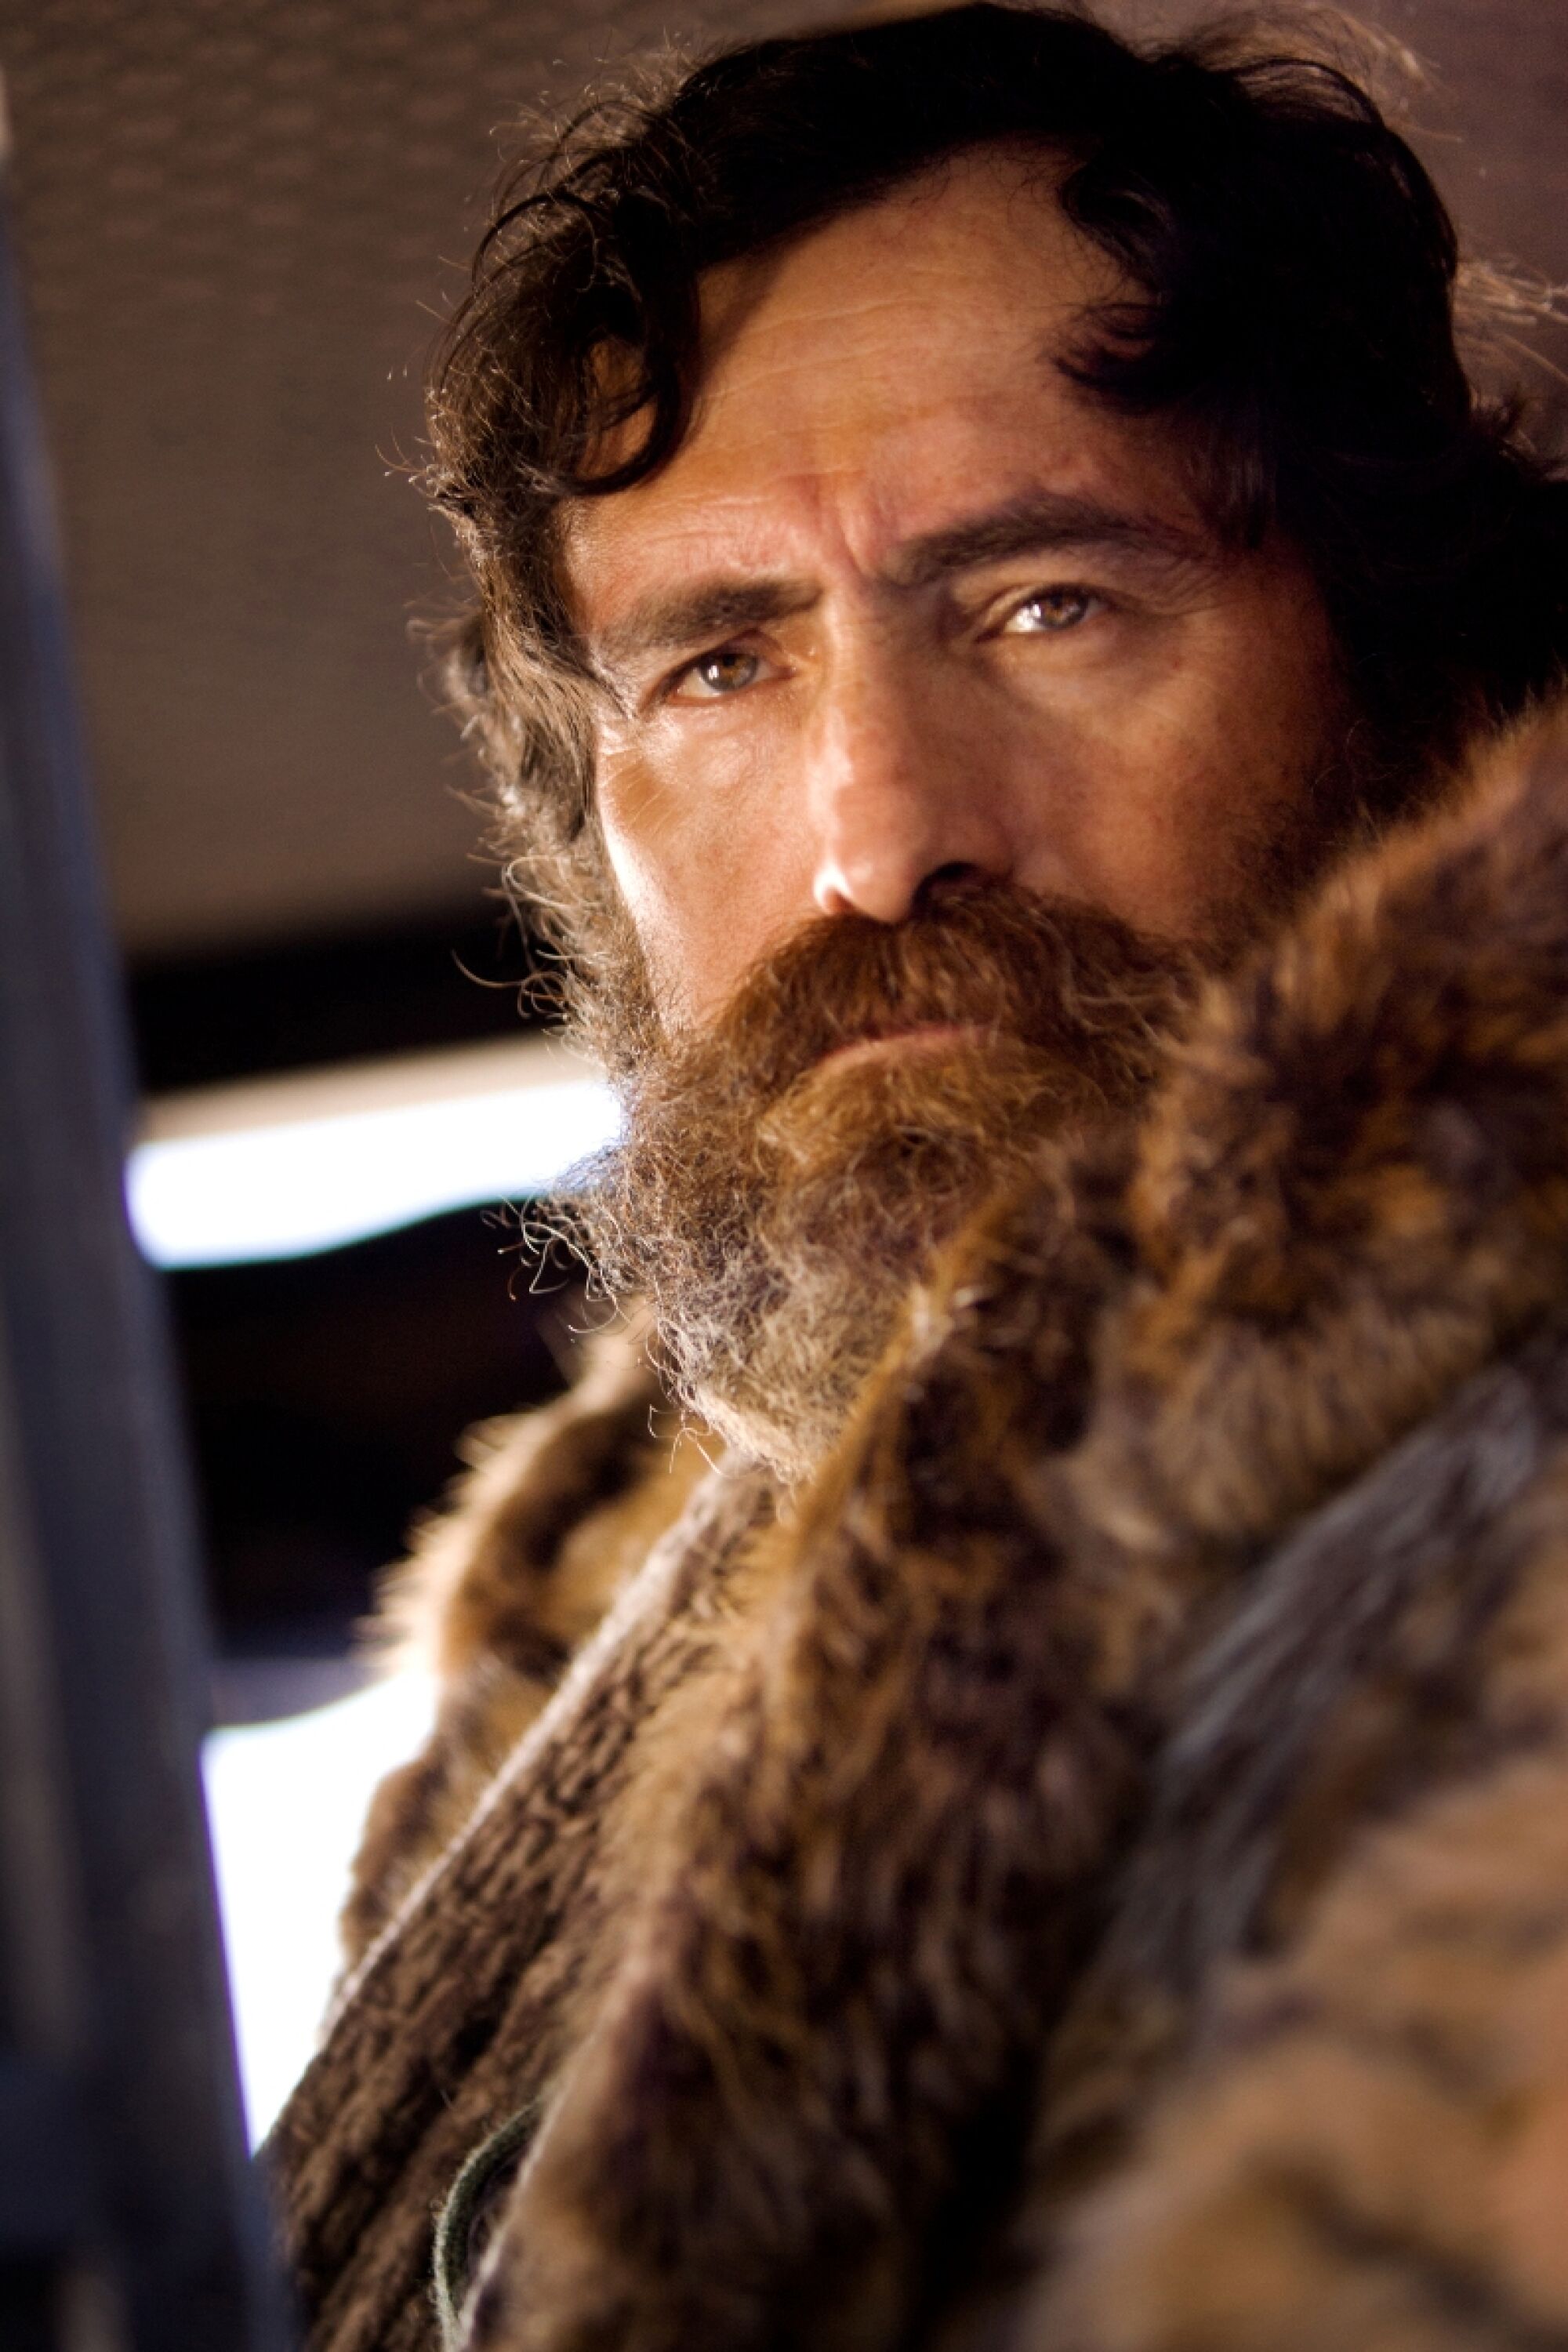 Demián Bichir in full beard, wearing a fur coat, in "The Hateful Eight."